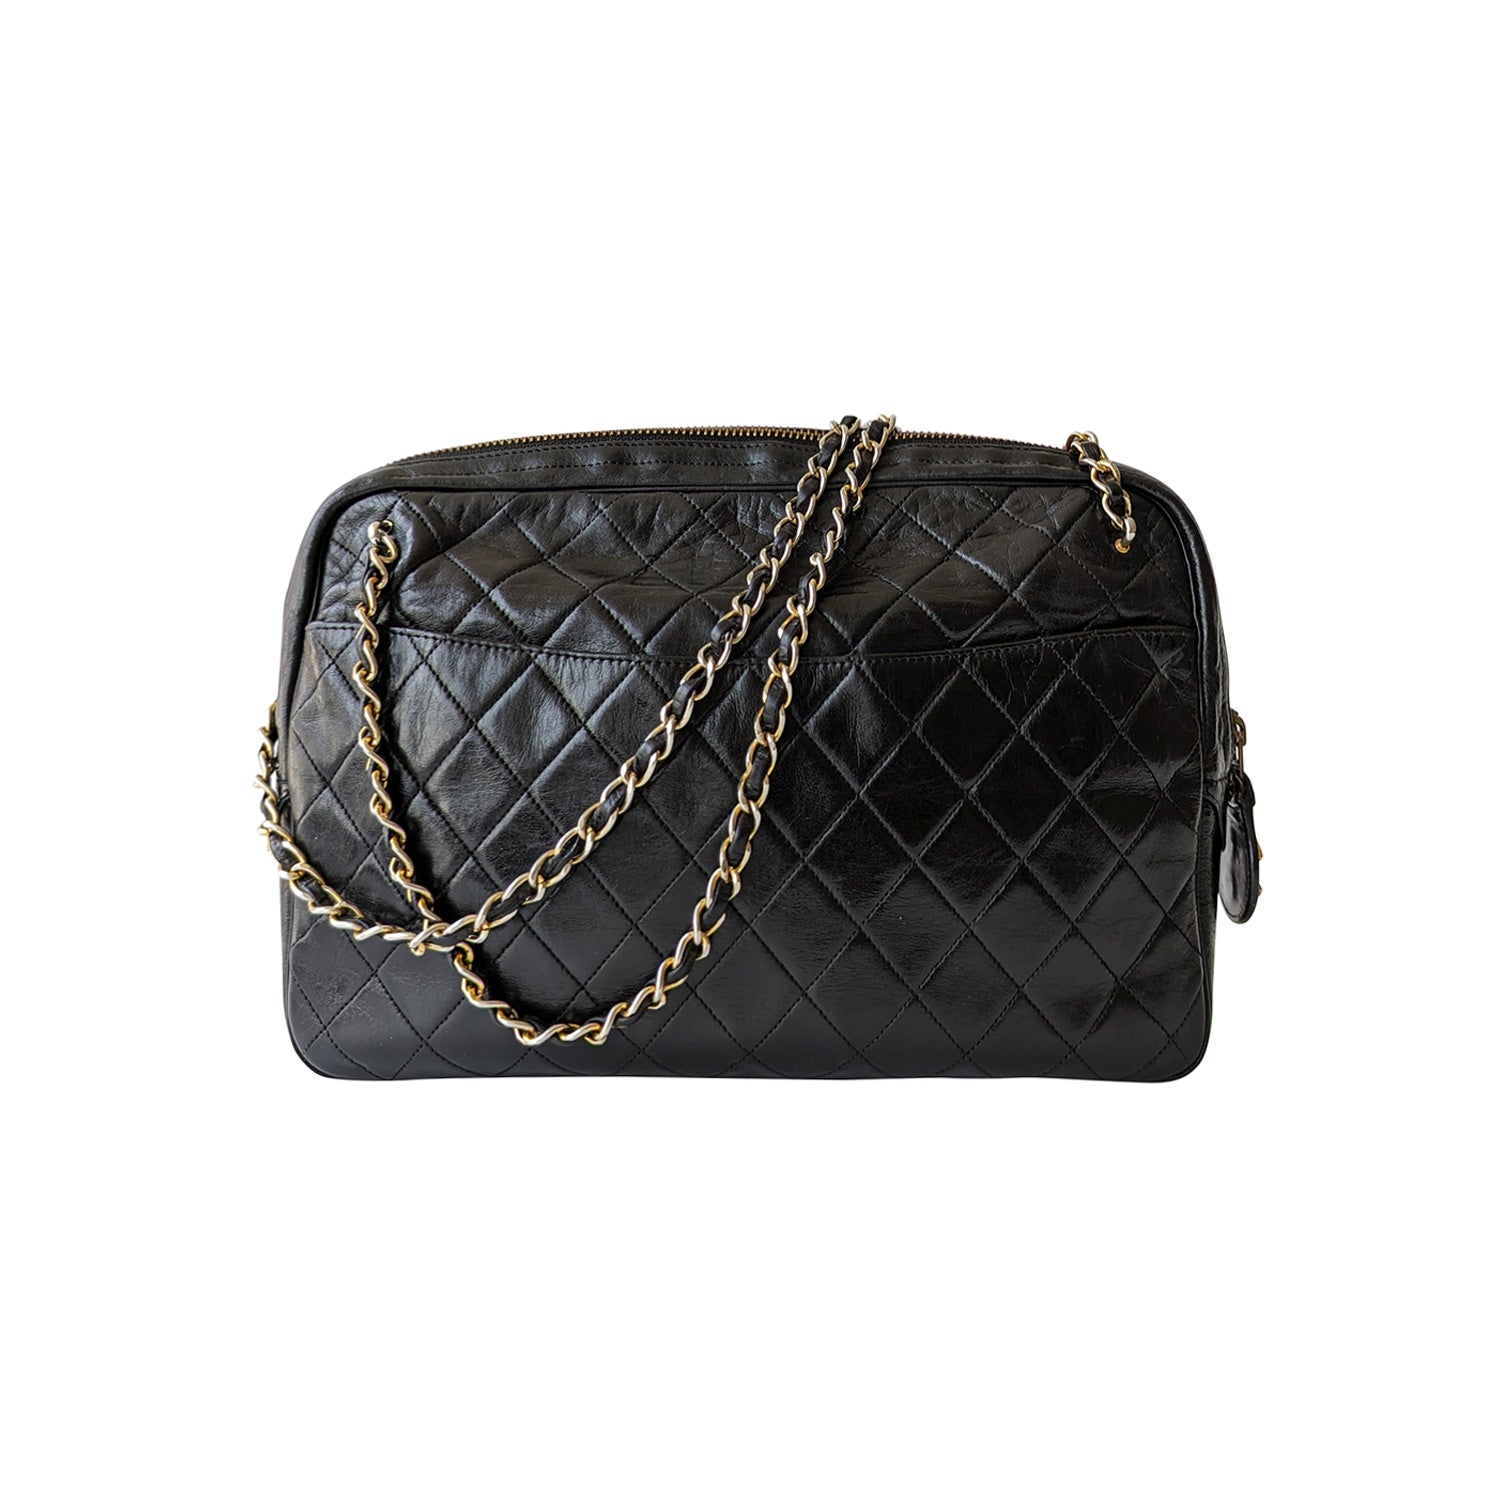 Shop authentic Chanel Quilted Vintage Shoulder Bag at revogue for just USD  2,000.00